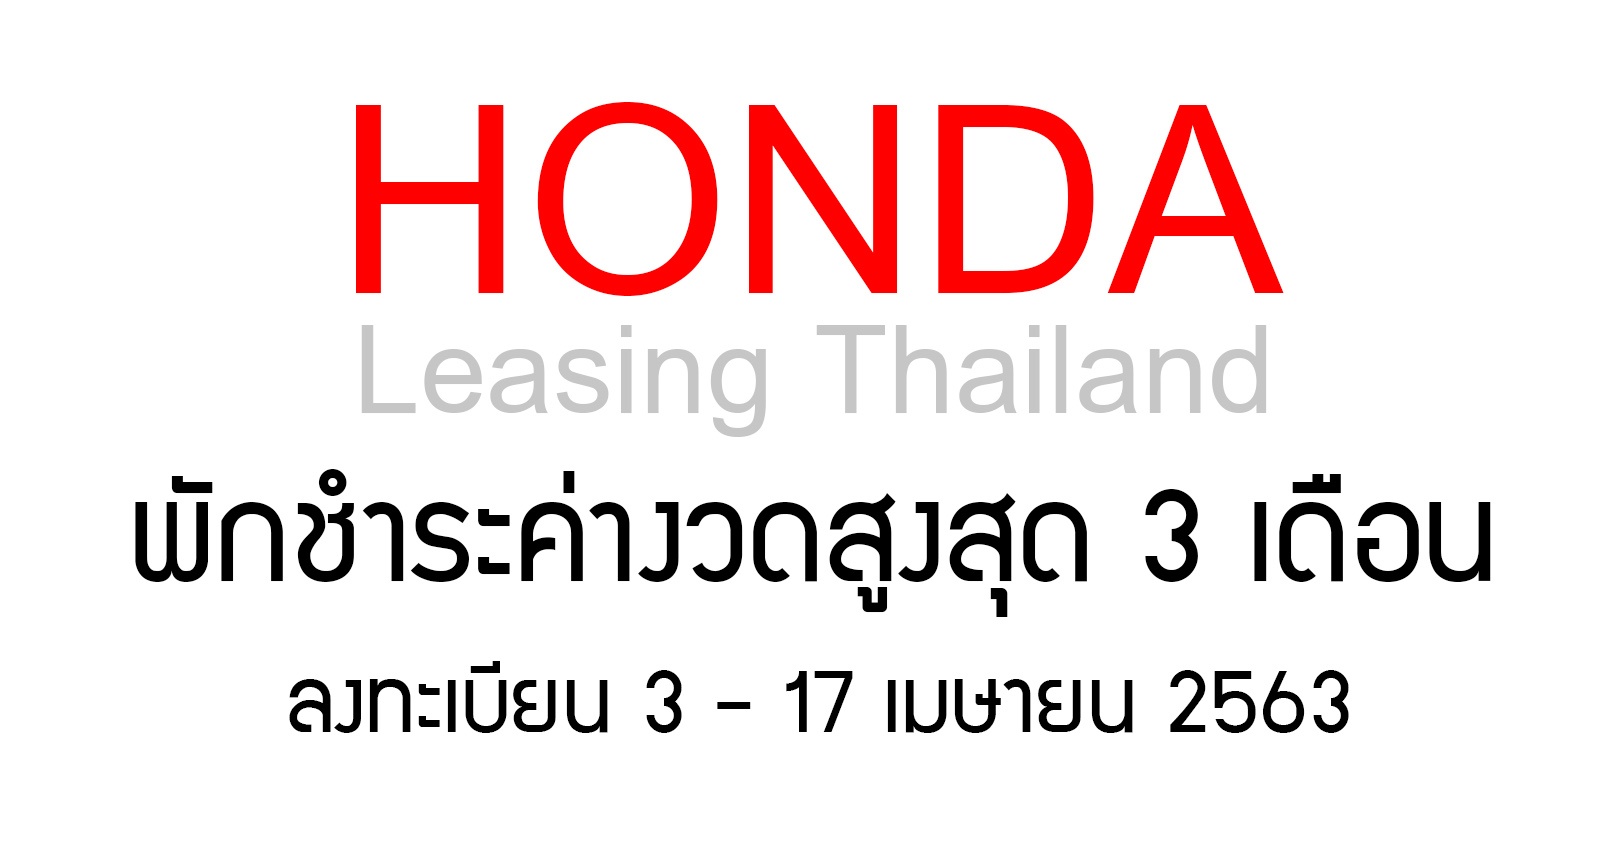 Honda Leasing เปิดลงทะเบียนพักหนี้ สูงสุด 3 เดือน เริ่ม 3 – 17 เมษายน 2563